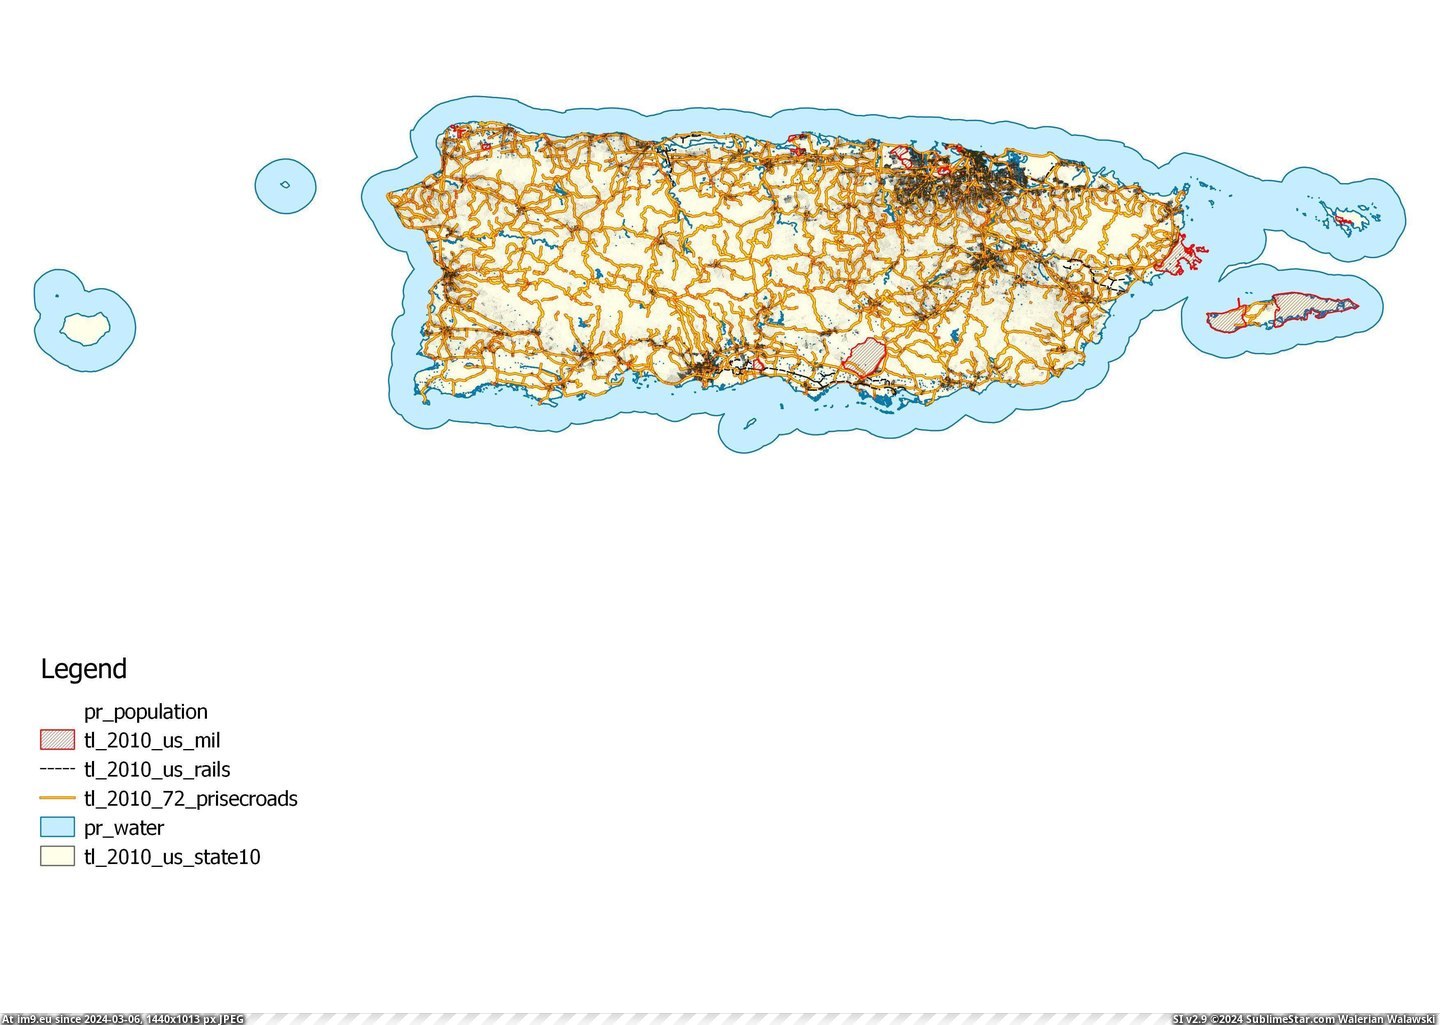 #Map #Population #Rico #Dot #Puerto [Mapporn] Population Dot Map Puerto Rico [3507x2480] Pic. (Obraz z album My r/MAPS favs))